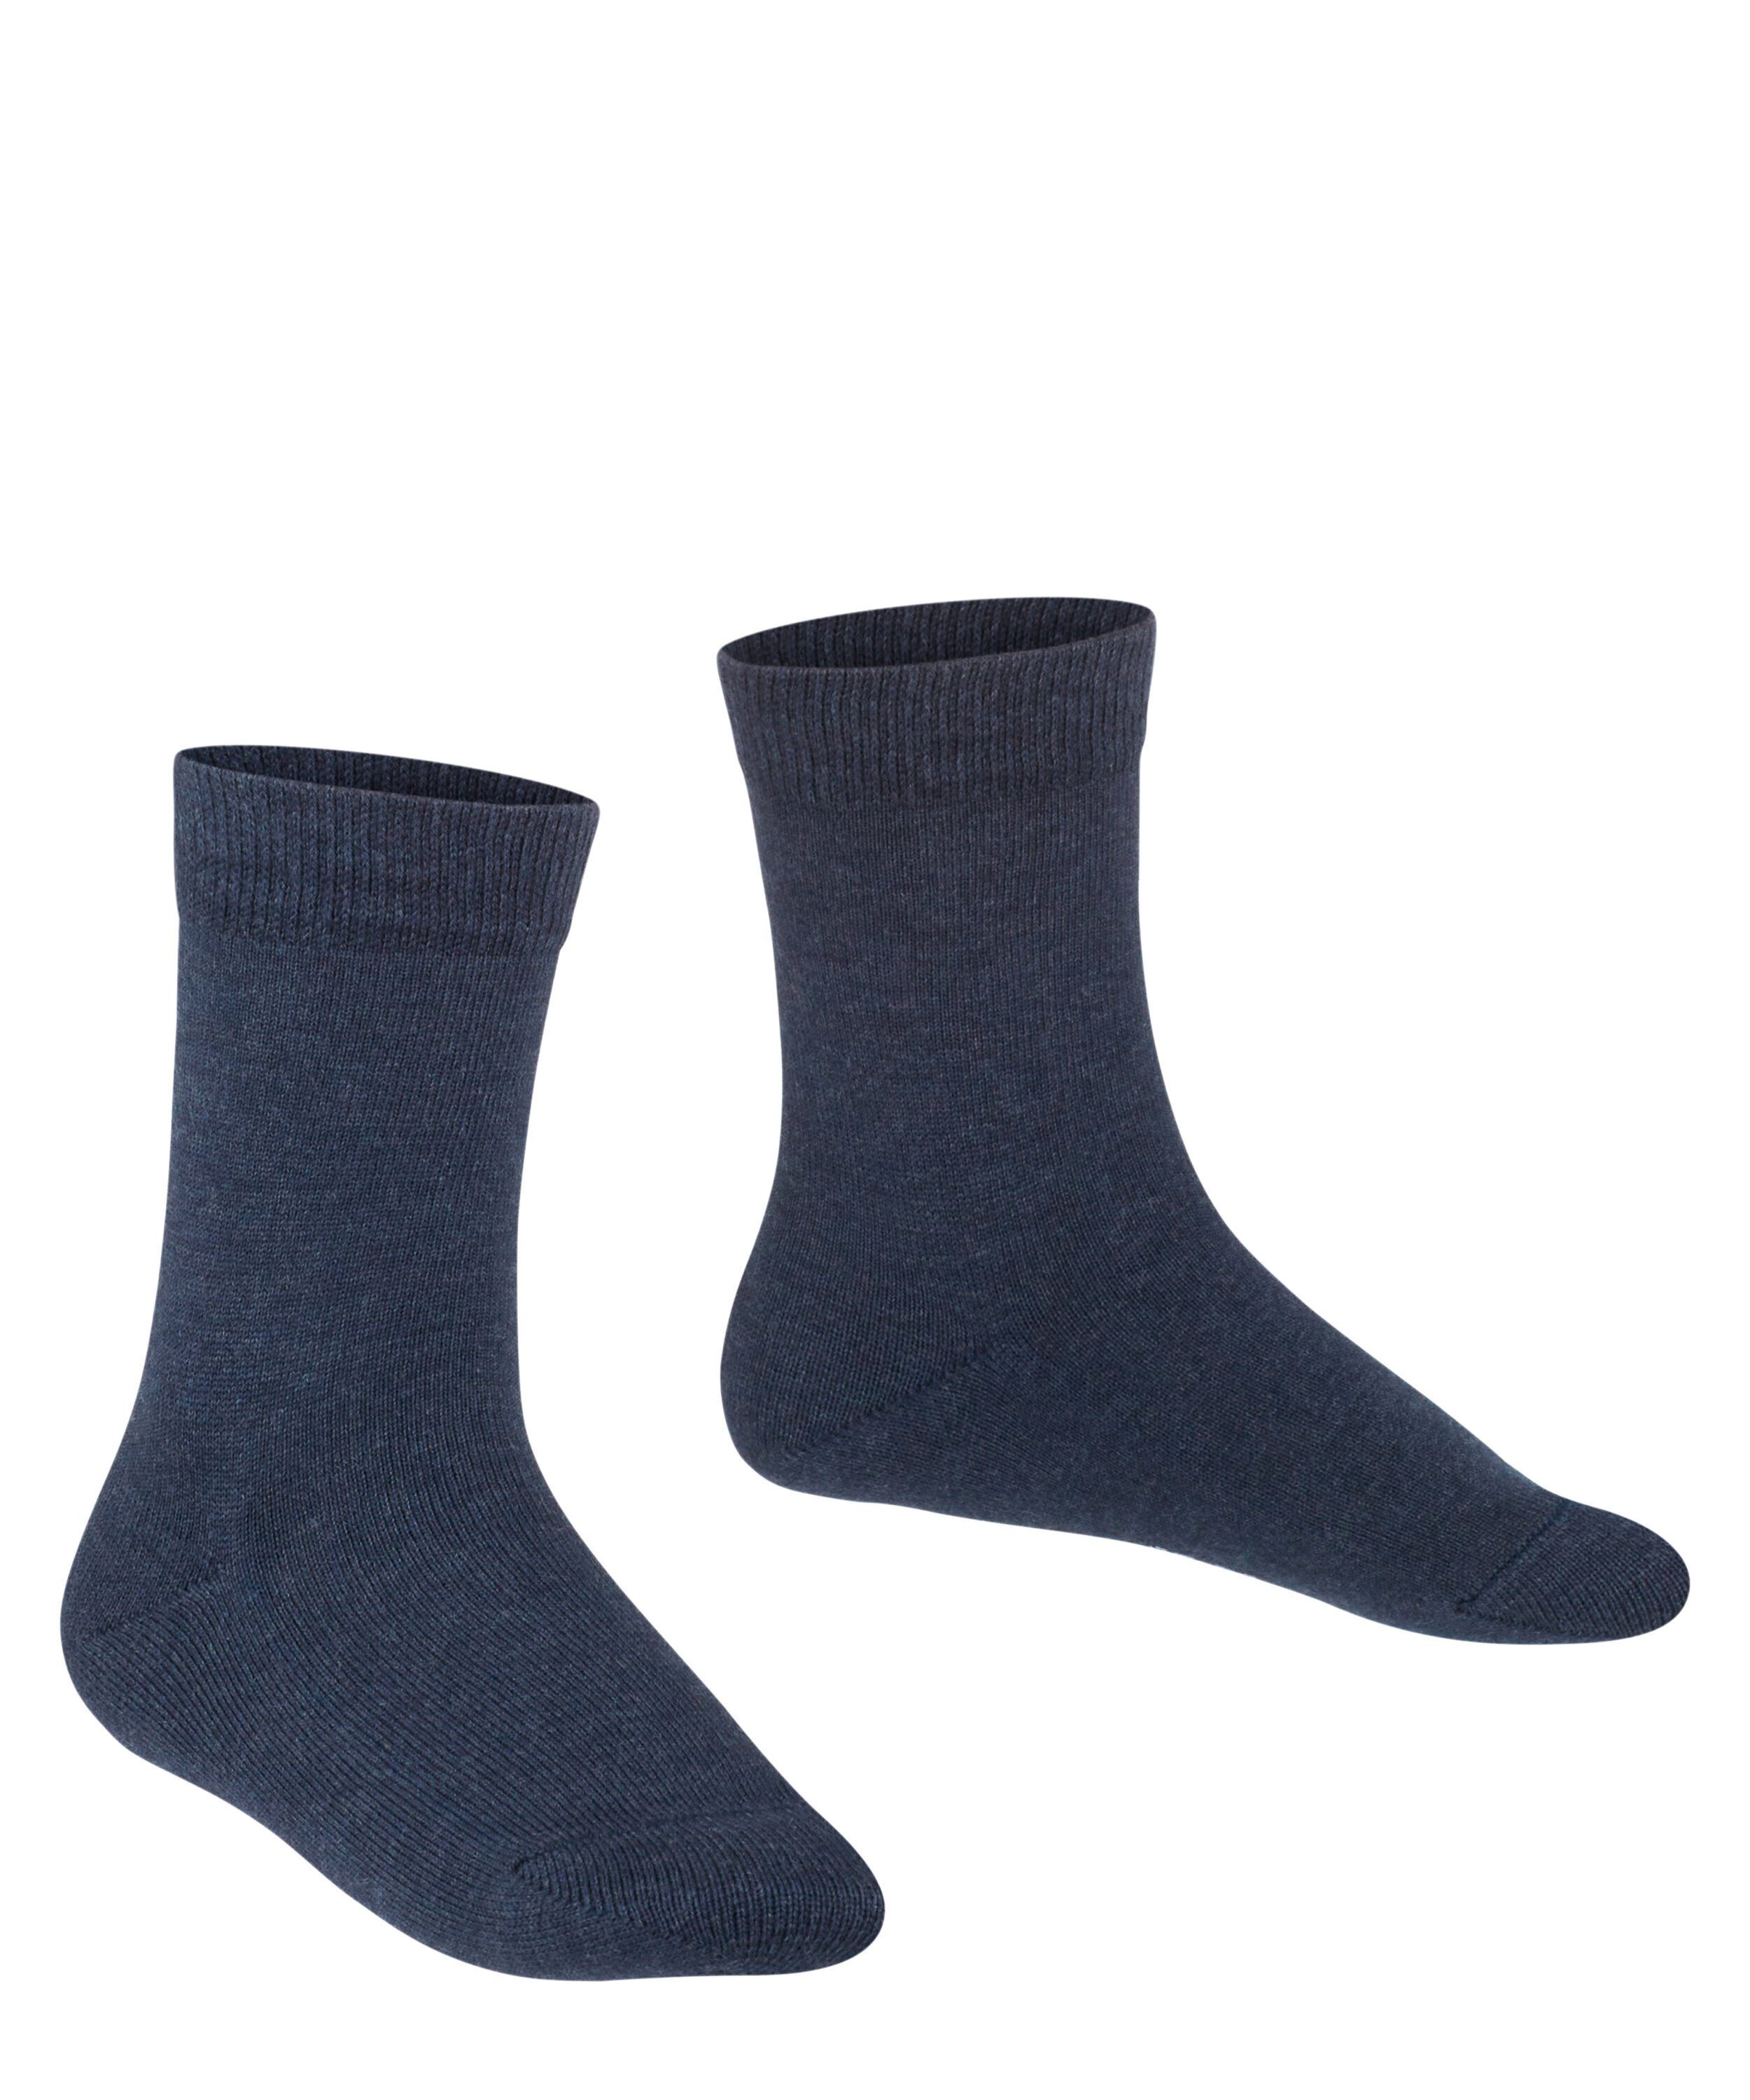 FALKE Socken Family navyblue m (1-Paar) (6490)